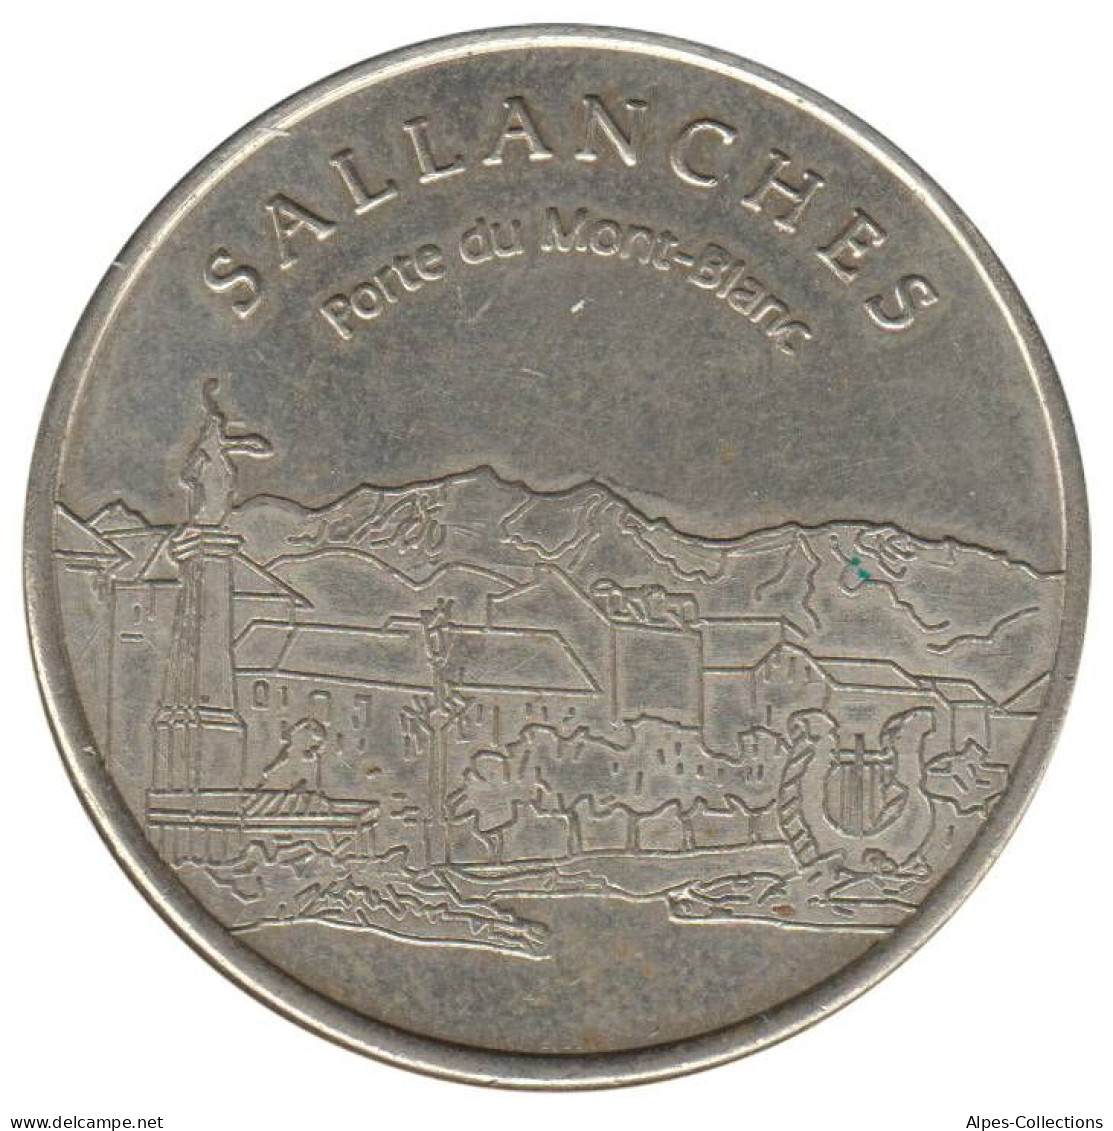 SALLANCHES - EU0020.1 - 2 EURO DES VILLES - Réf: NR - 1998 - Euro Der Städte